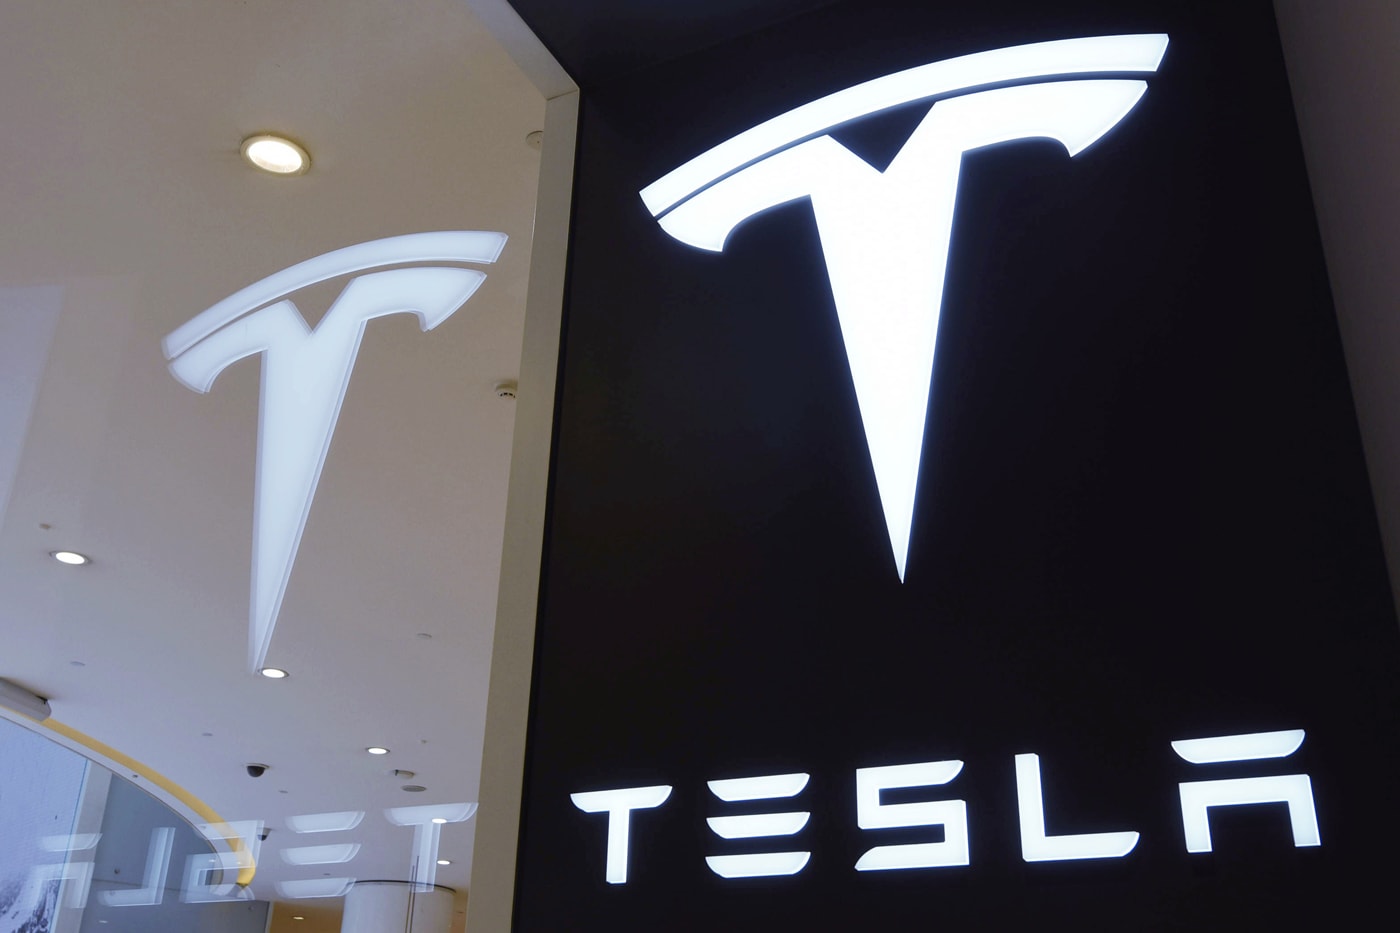 Tesla Applies for UK Electricity Provider License elon musk sustainability business renewable energy autobidder platform 